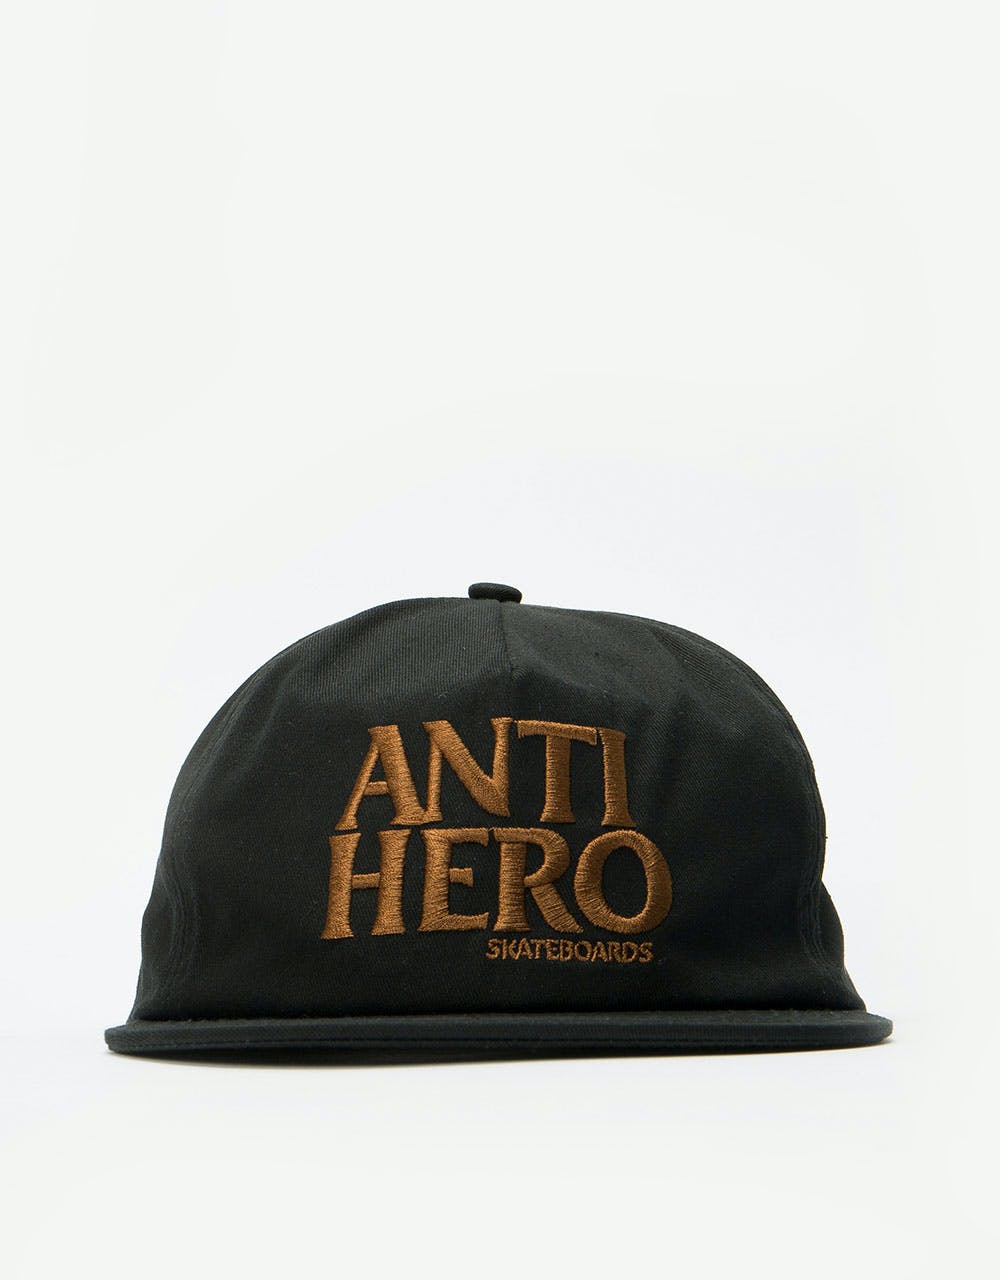 Anti Hero Blackhero Embroidered Snapback Cap - Black/Brown